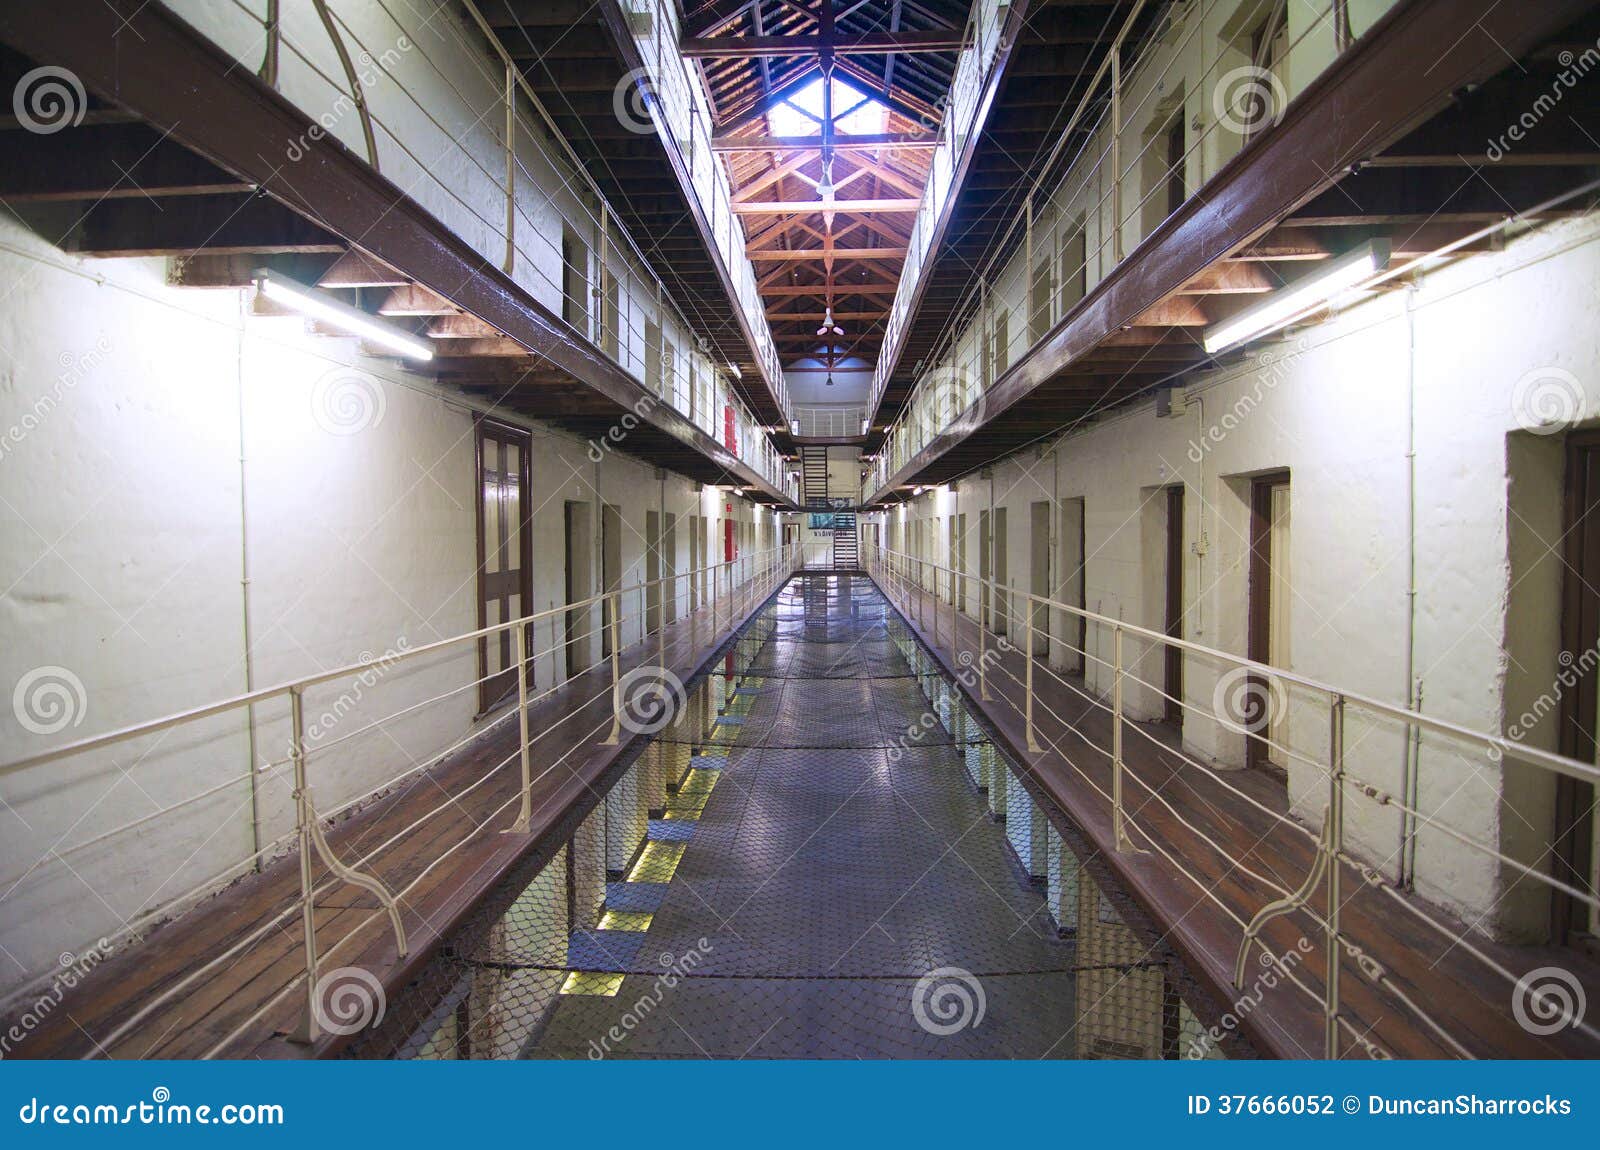 fremantle prison, western australia